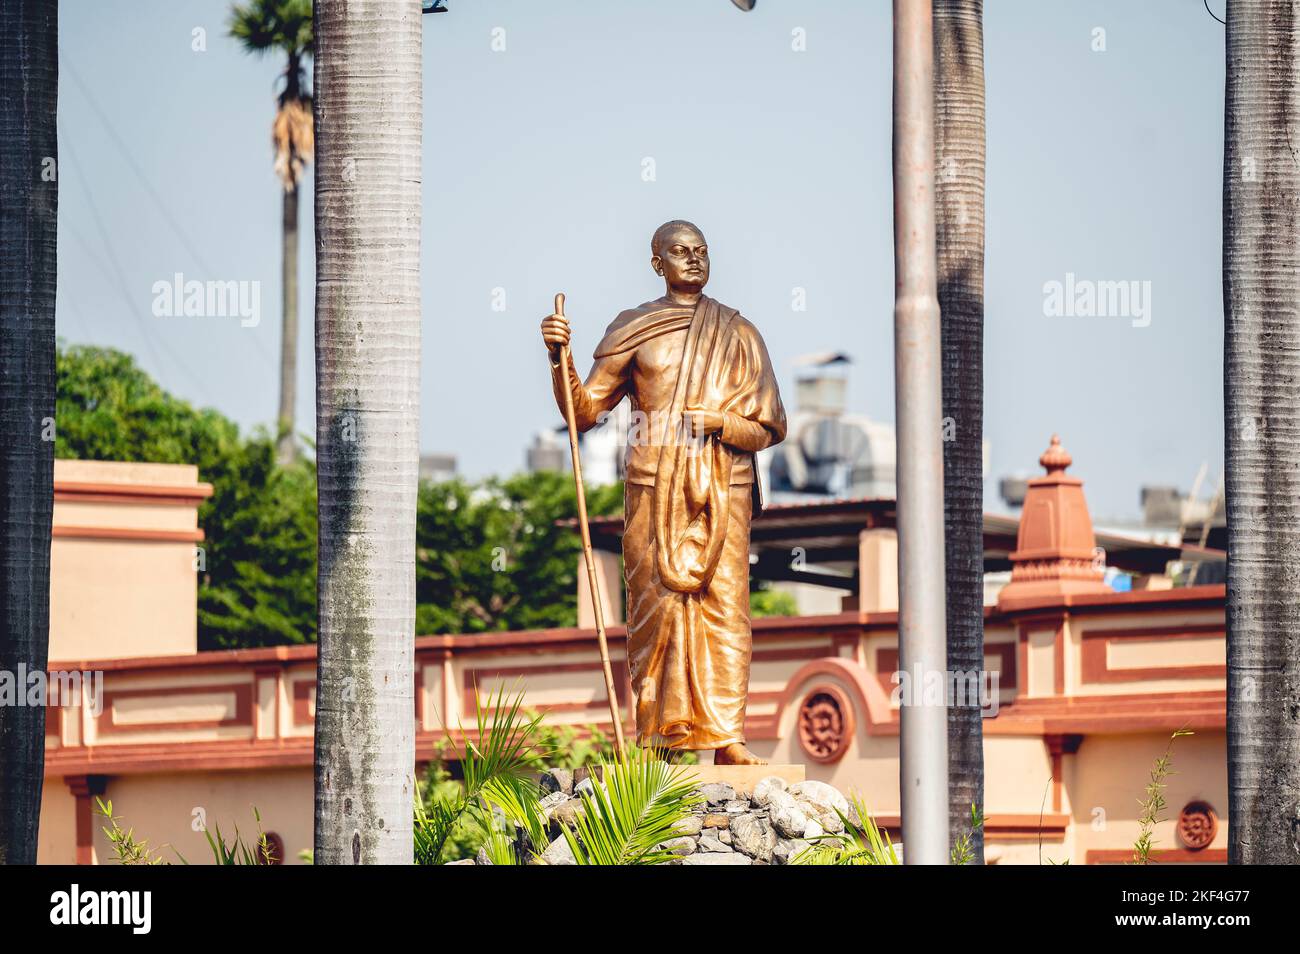 The statue of Swami Vivekananda at the Hindu Dakshineswar Kali Temple in Kolkata, India Stock Photo